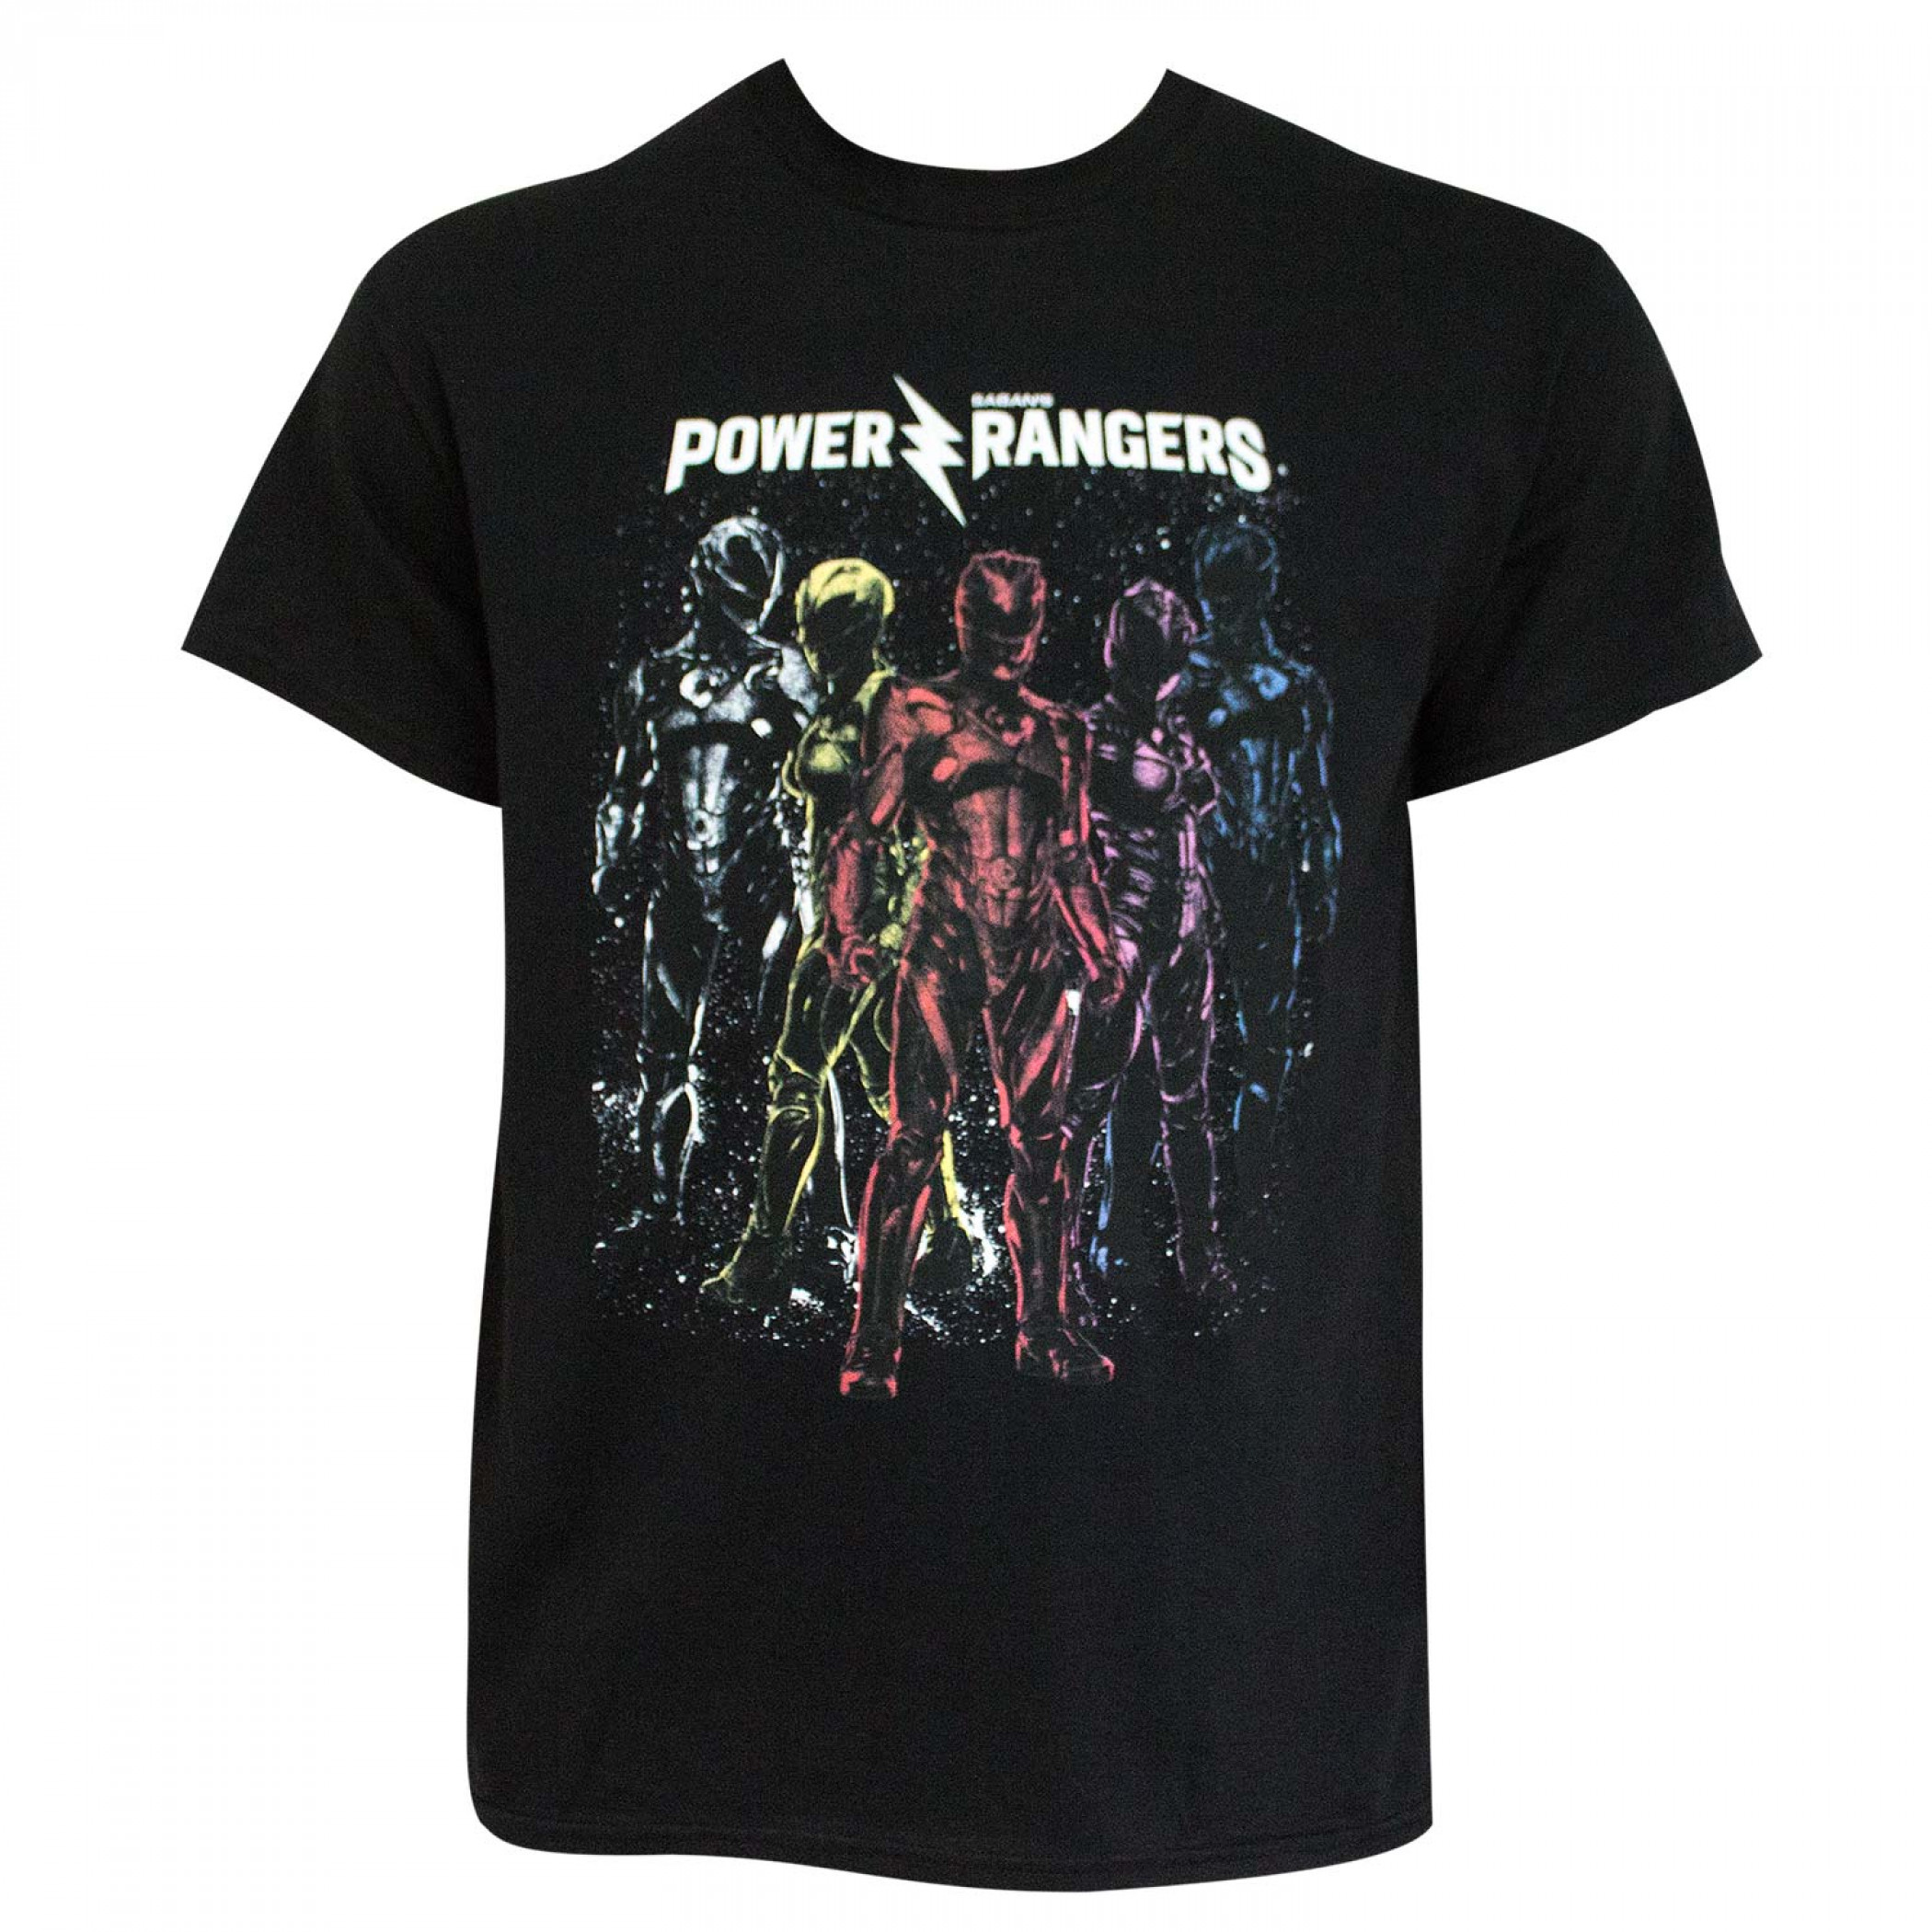 Power Rangers Crew Black Tee Shirt